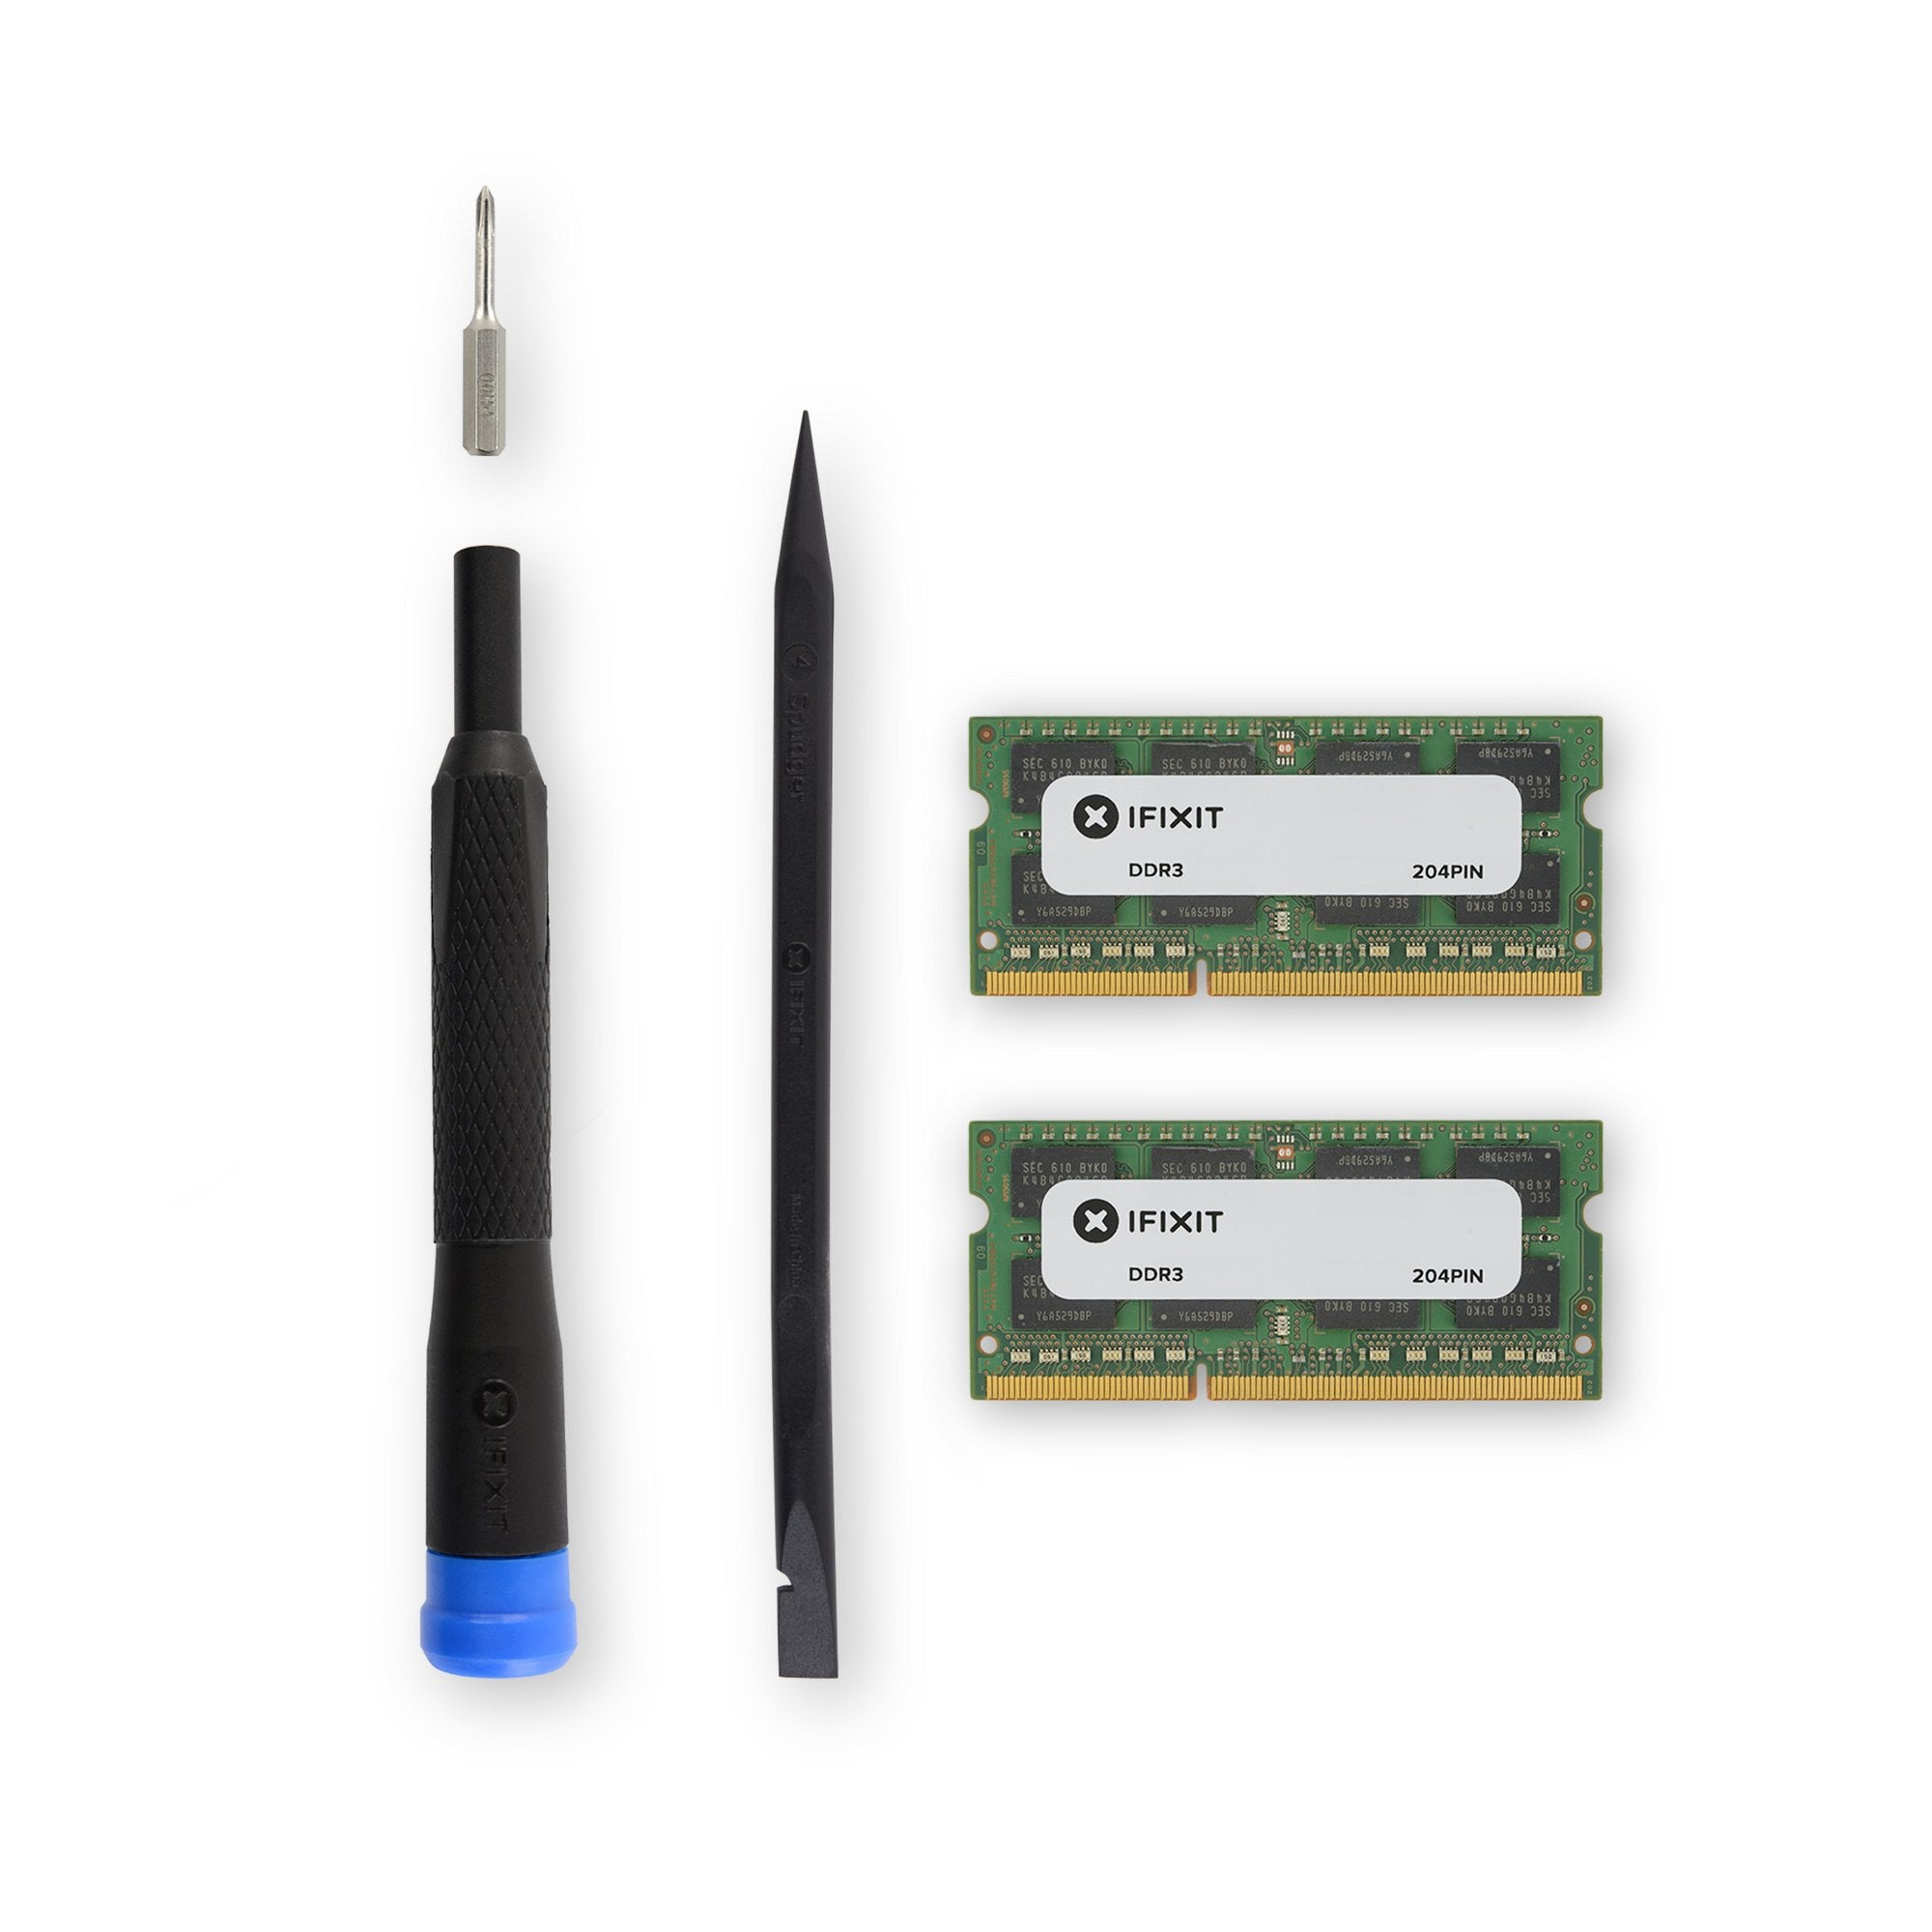 MacBook Pro 17" Unibody (Mid 2009) Memory Maxxer RAM Upgrade Kit